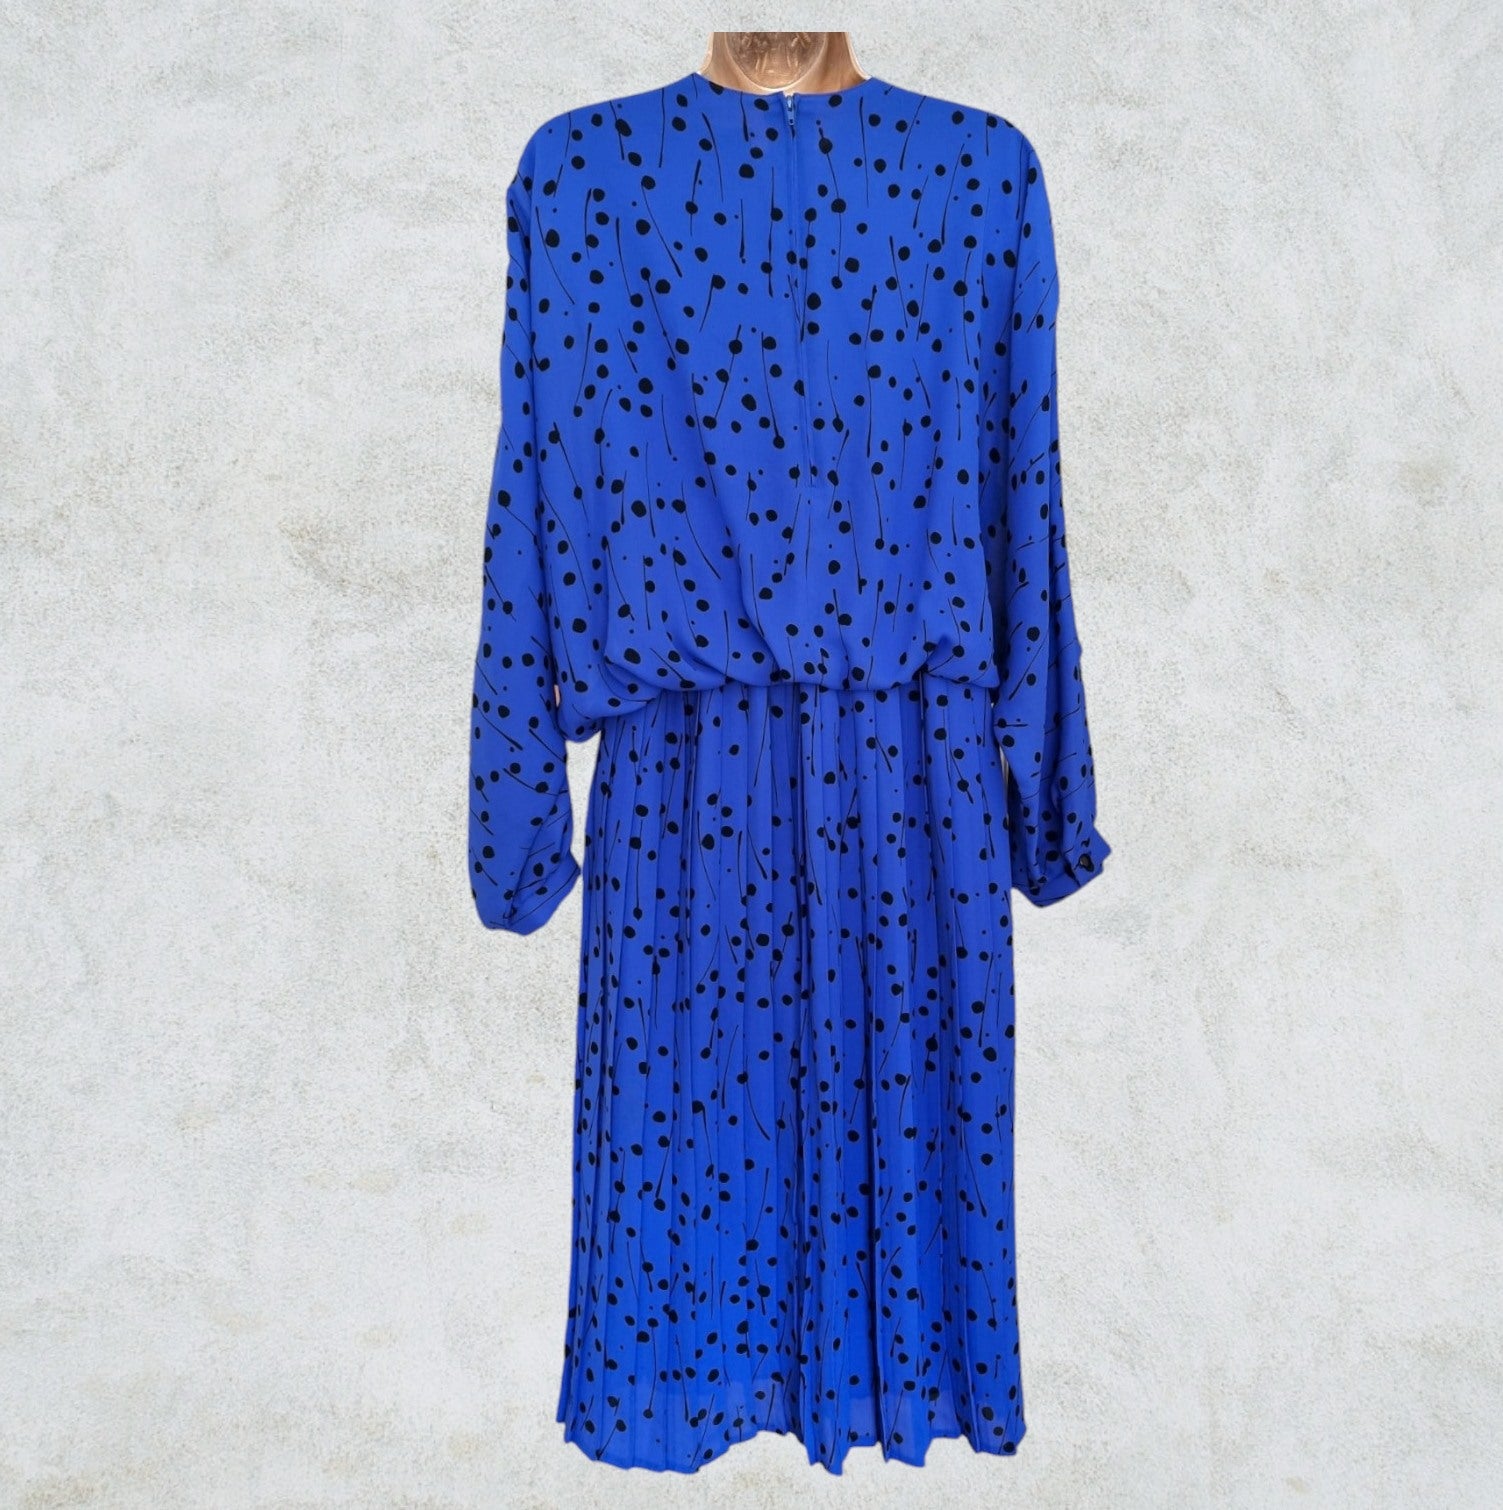 Golden Gate Women’s Rare Vintage 1980’s Blue Dress UK 16 US 12 EU 44 Timeless Fashions